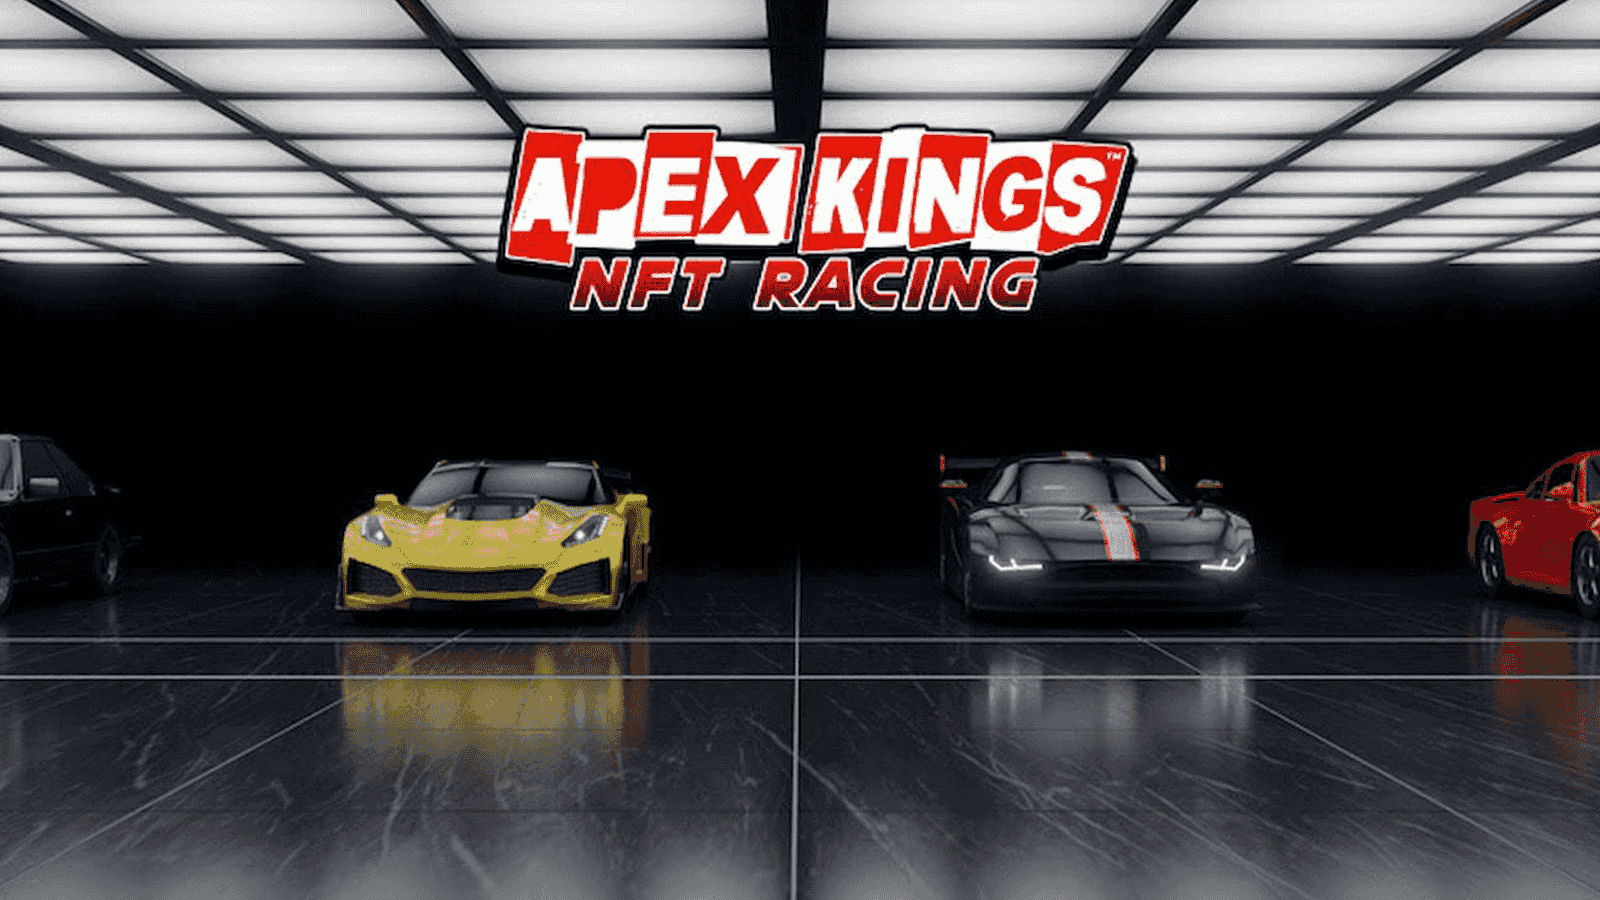 Apex Kings NFT Racing - Oyun İncelemesi